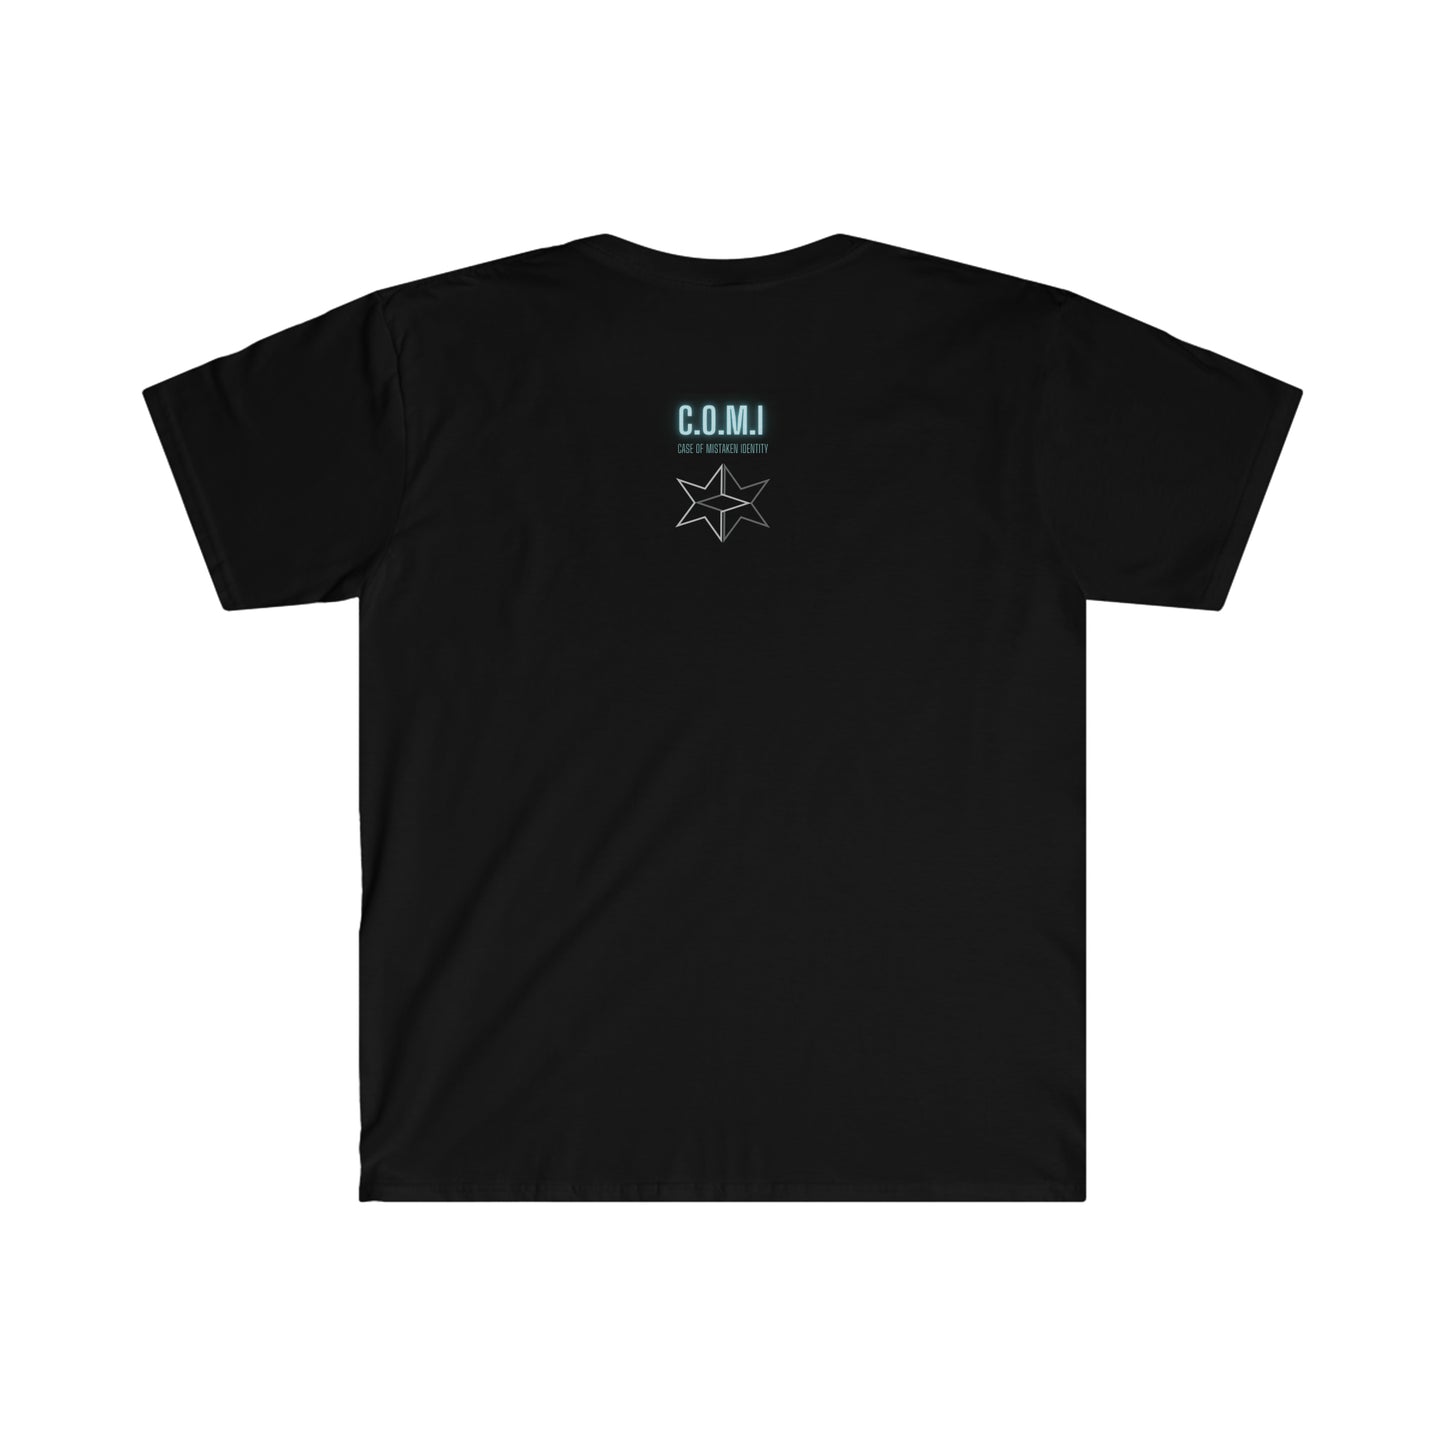 Punk'd Racer - Unisex Softstyle T-Shirt